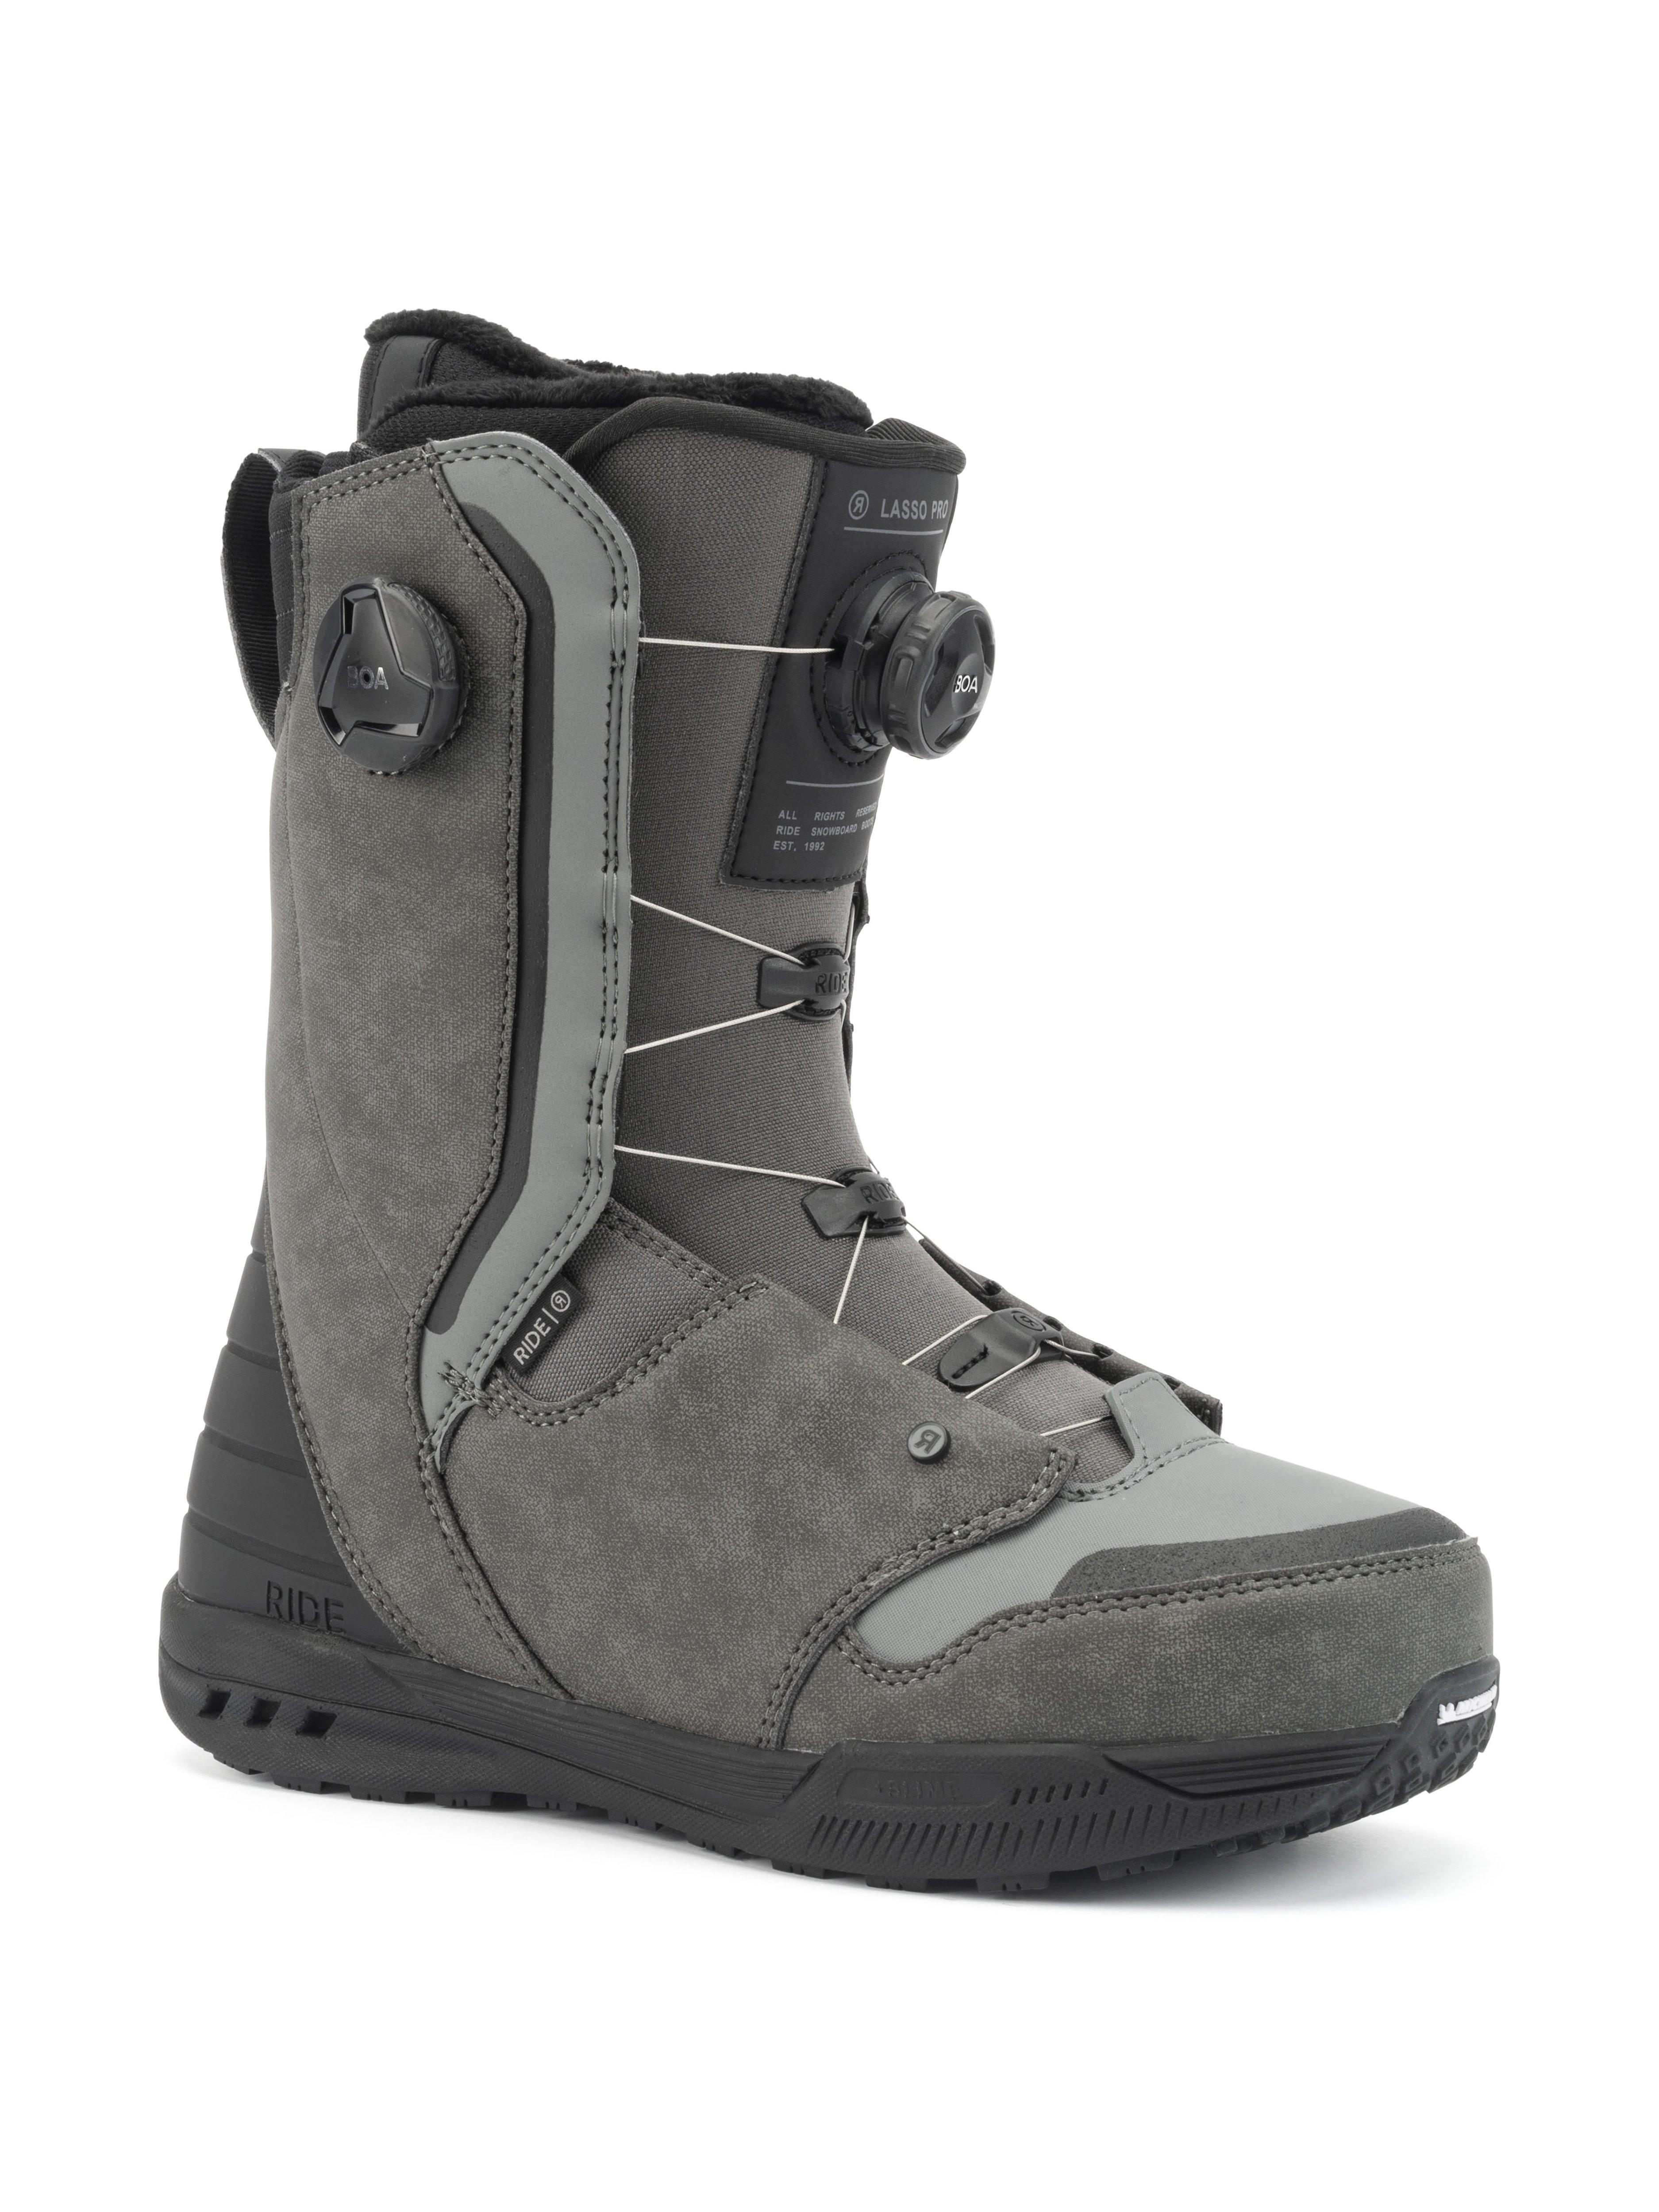 Flow Ranger BOA Senior Snowboard Boots NEW Black Lists @ $170 